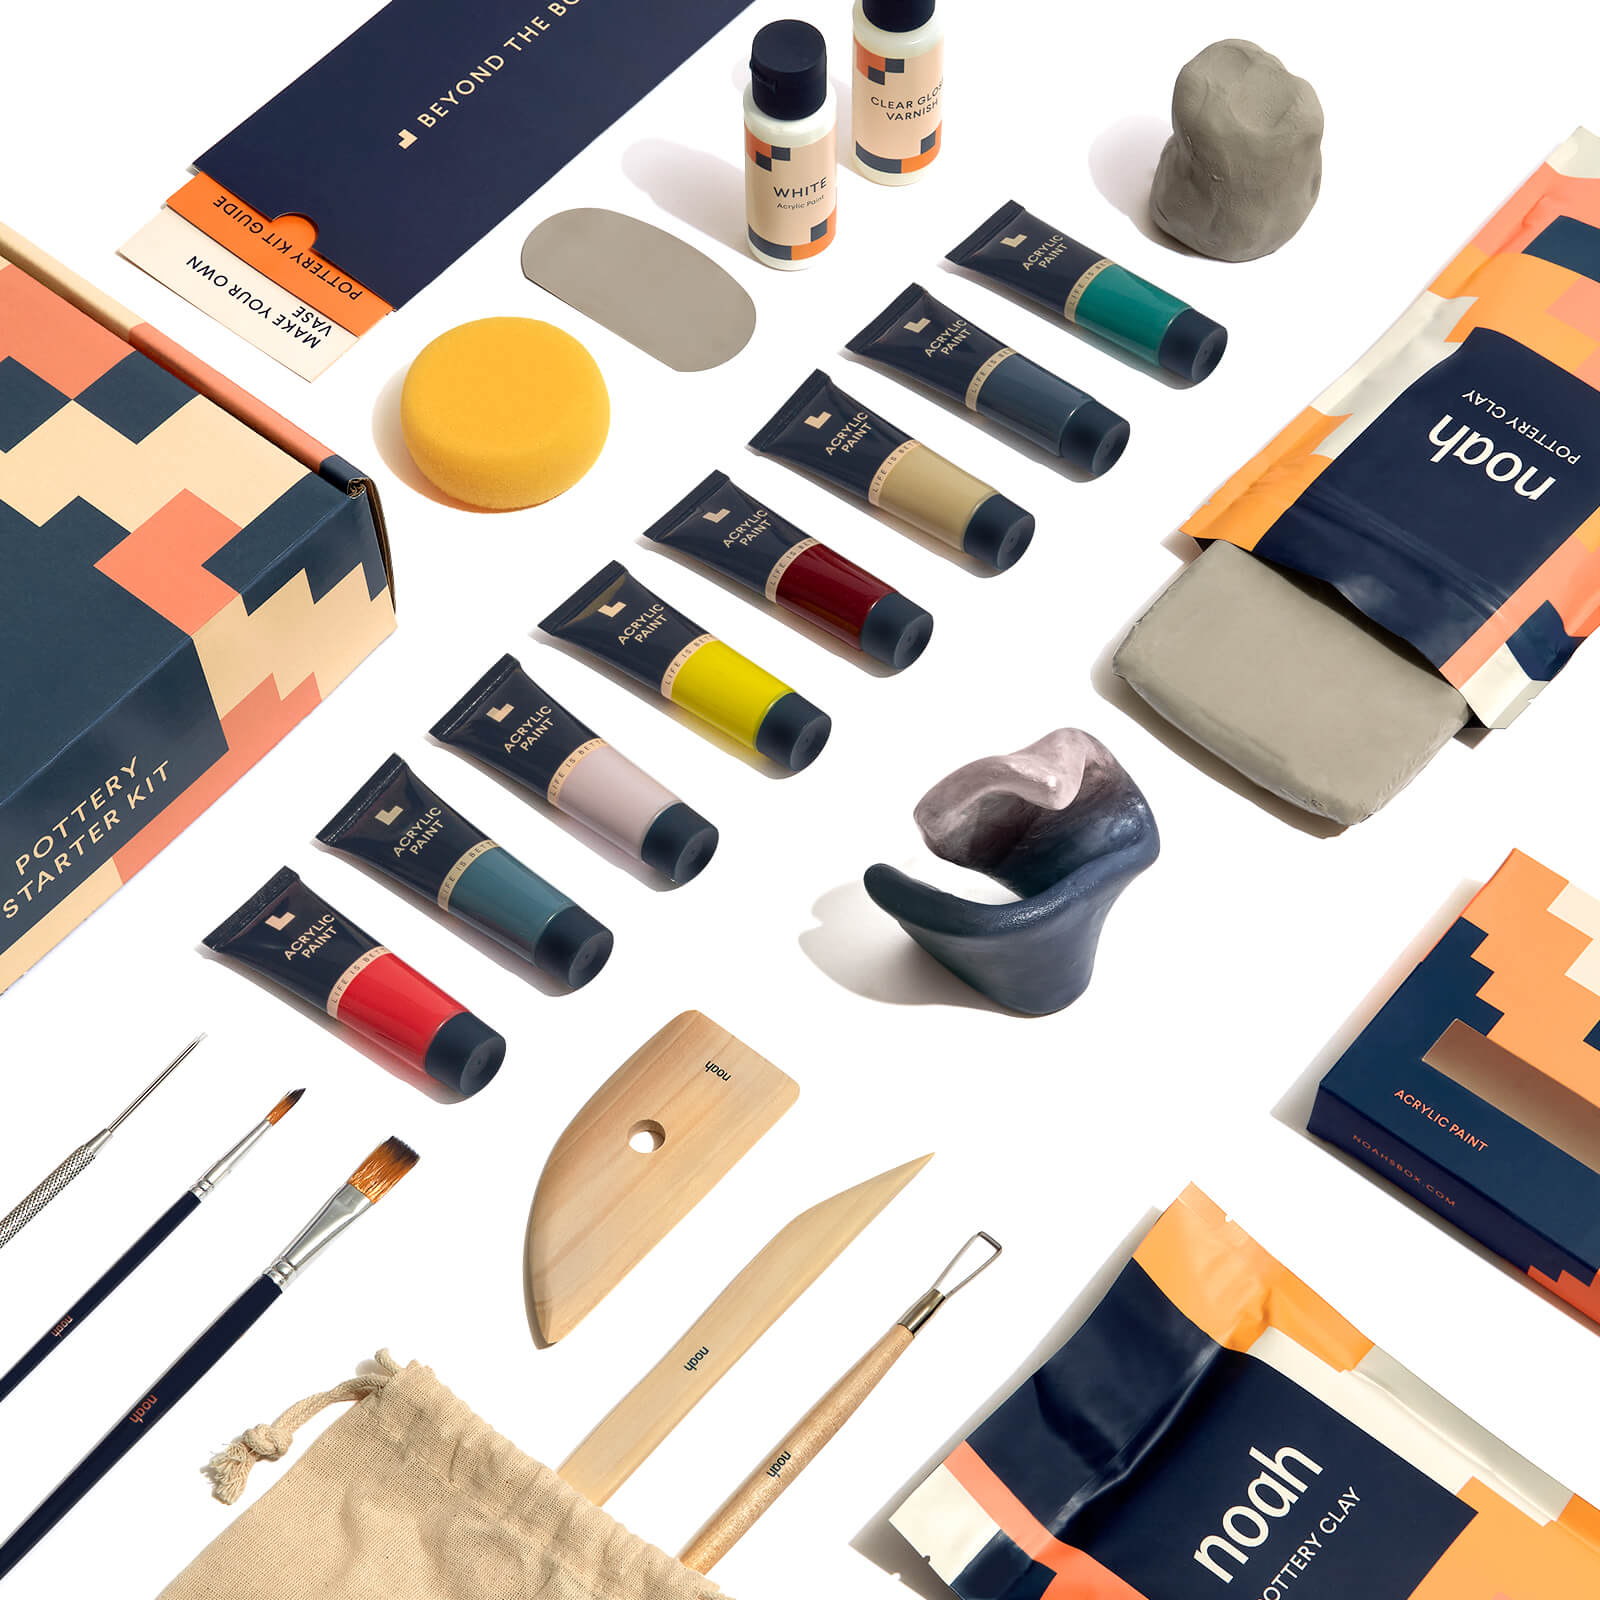 New Home Starter Kit  First Home Essentials Pack – Noah's Box